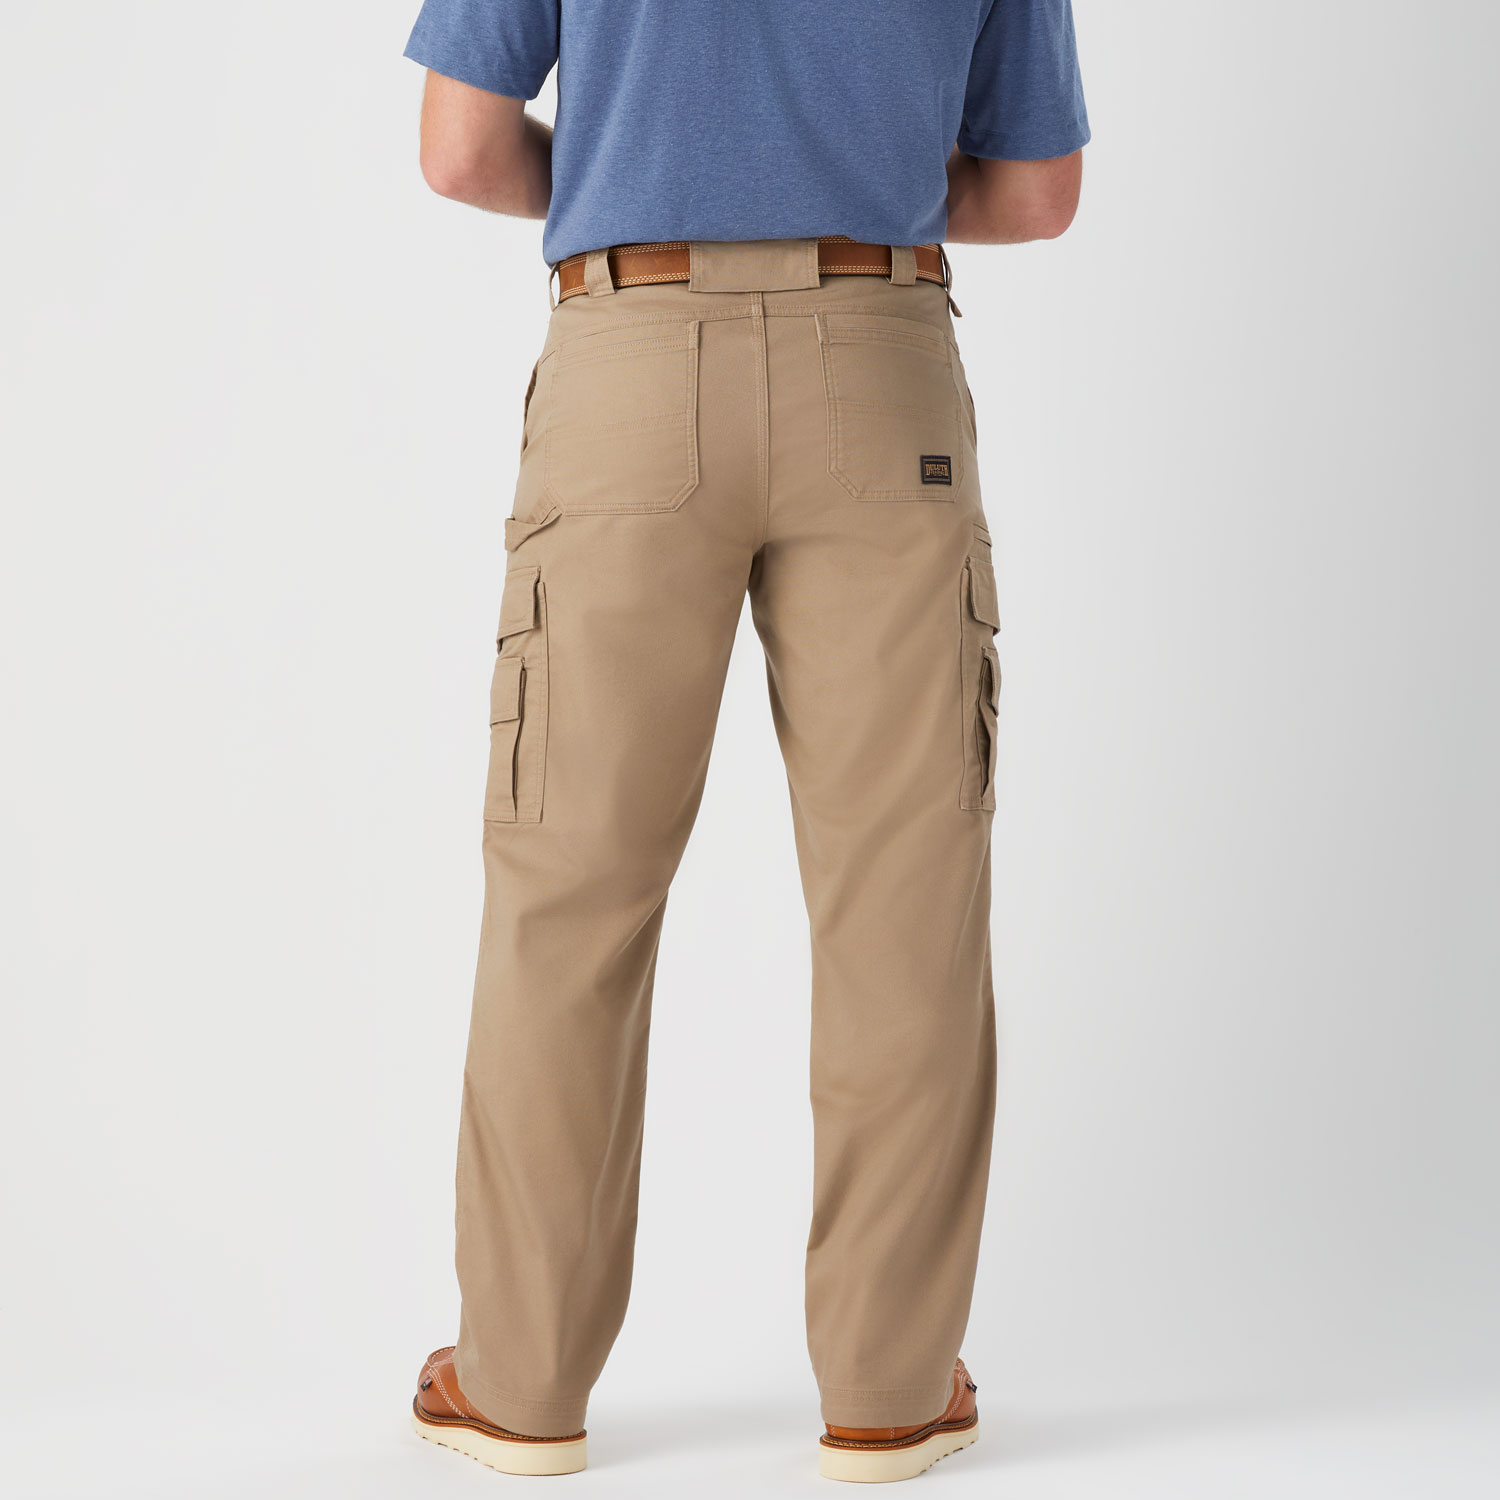 Men's DuluthFlex Sweat Management Relaxed Fit Cargo Pants